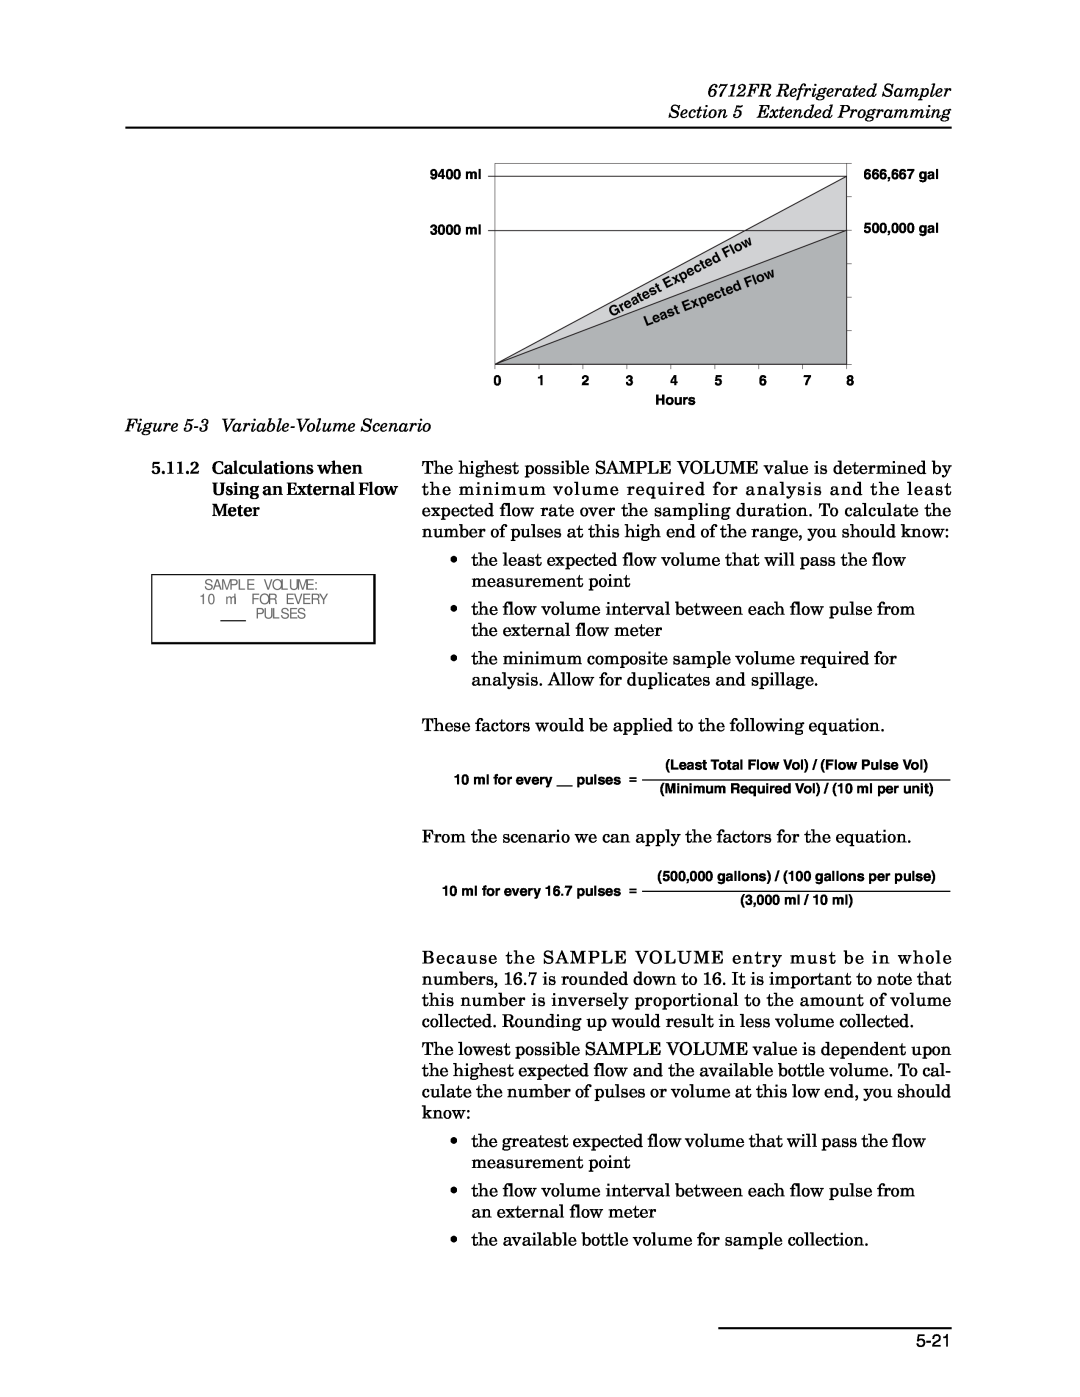 Teledyne manual 6712FR Refrigerated Sampler Extended Programming, 3 Variable-Volume Scenario 